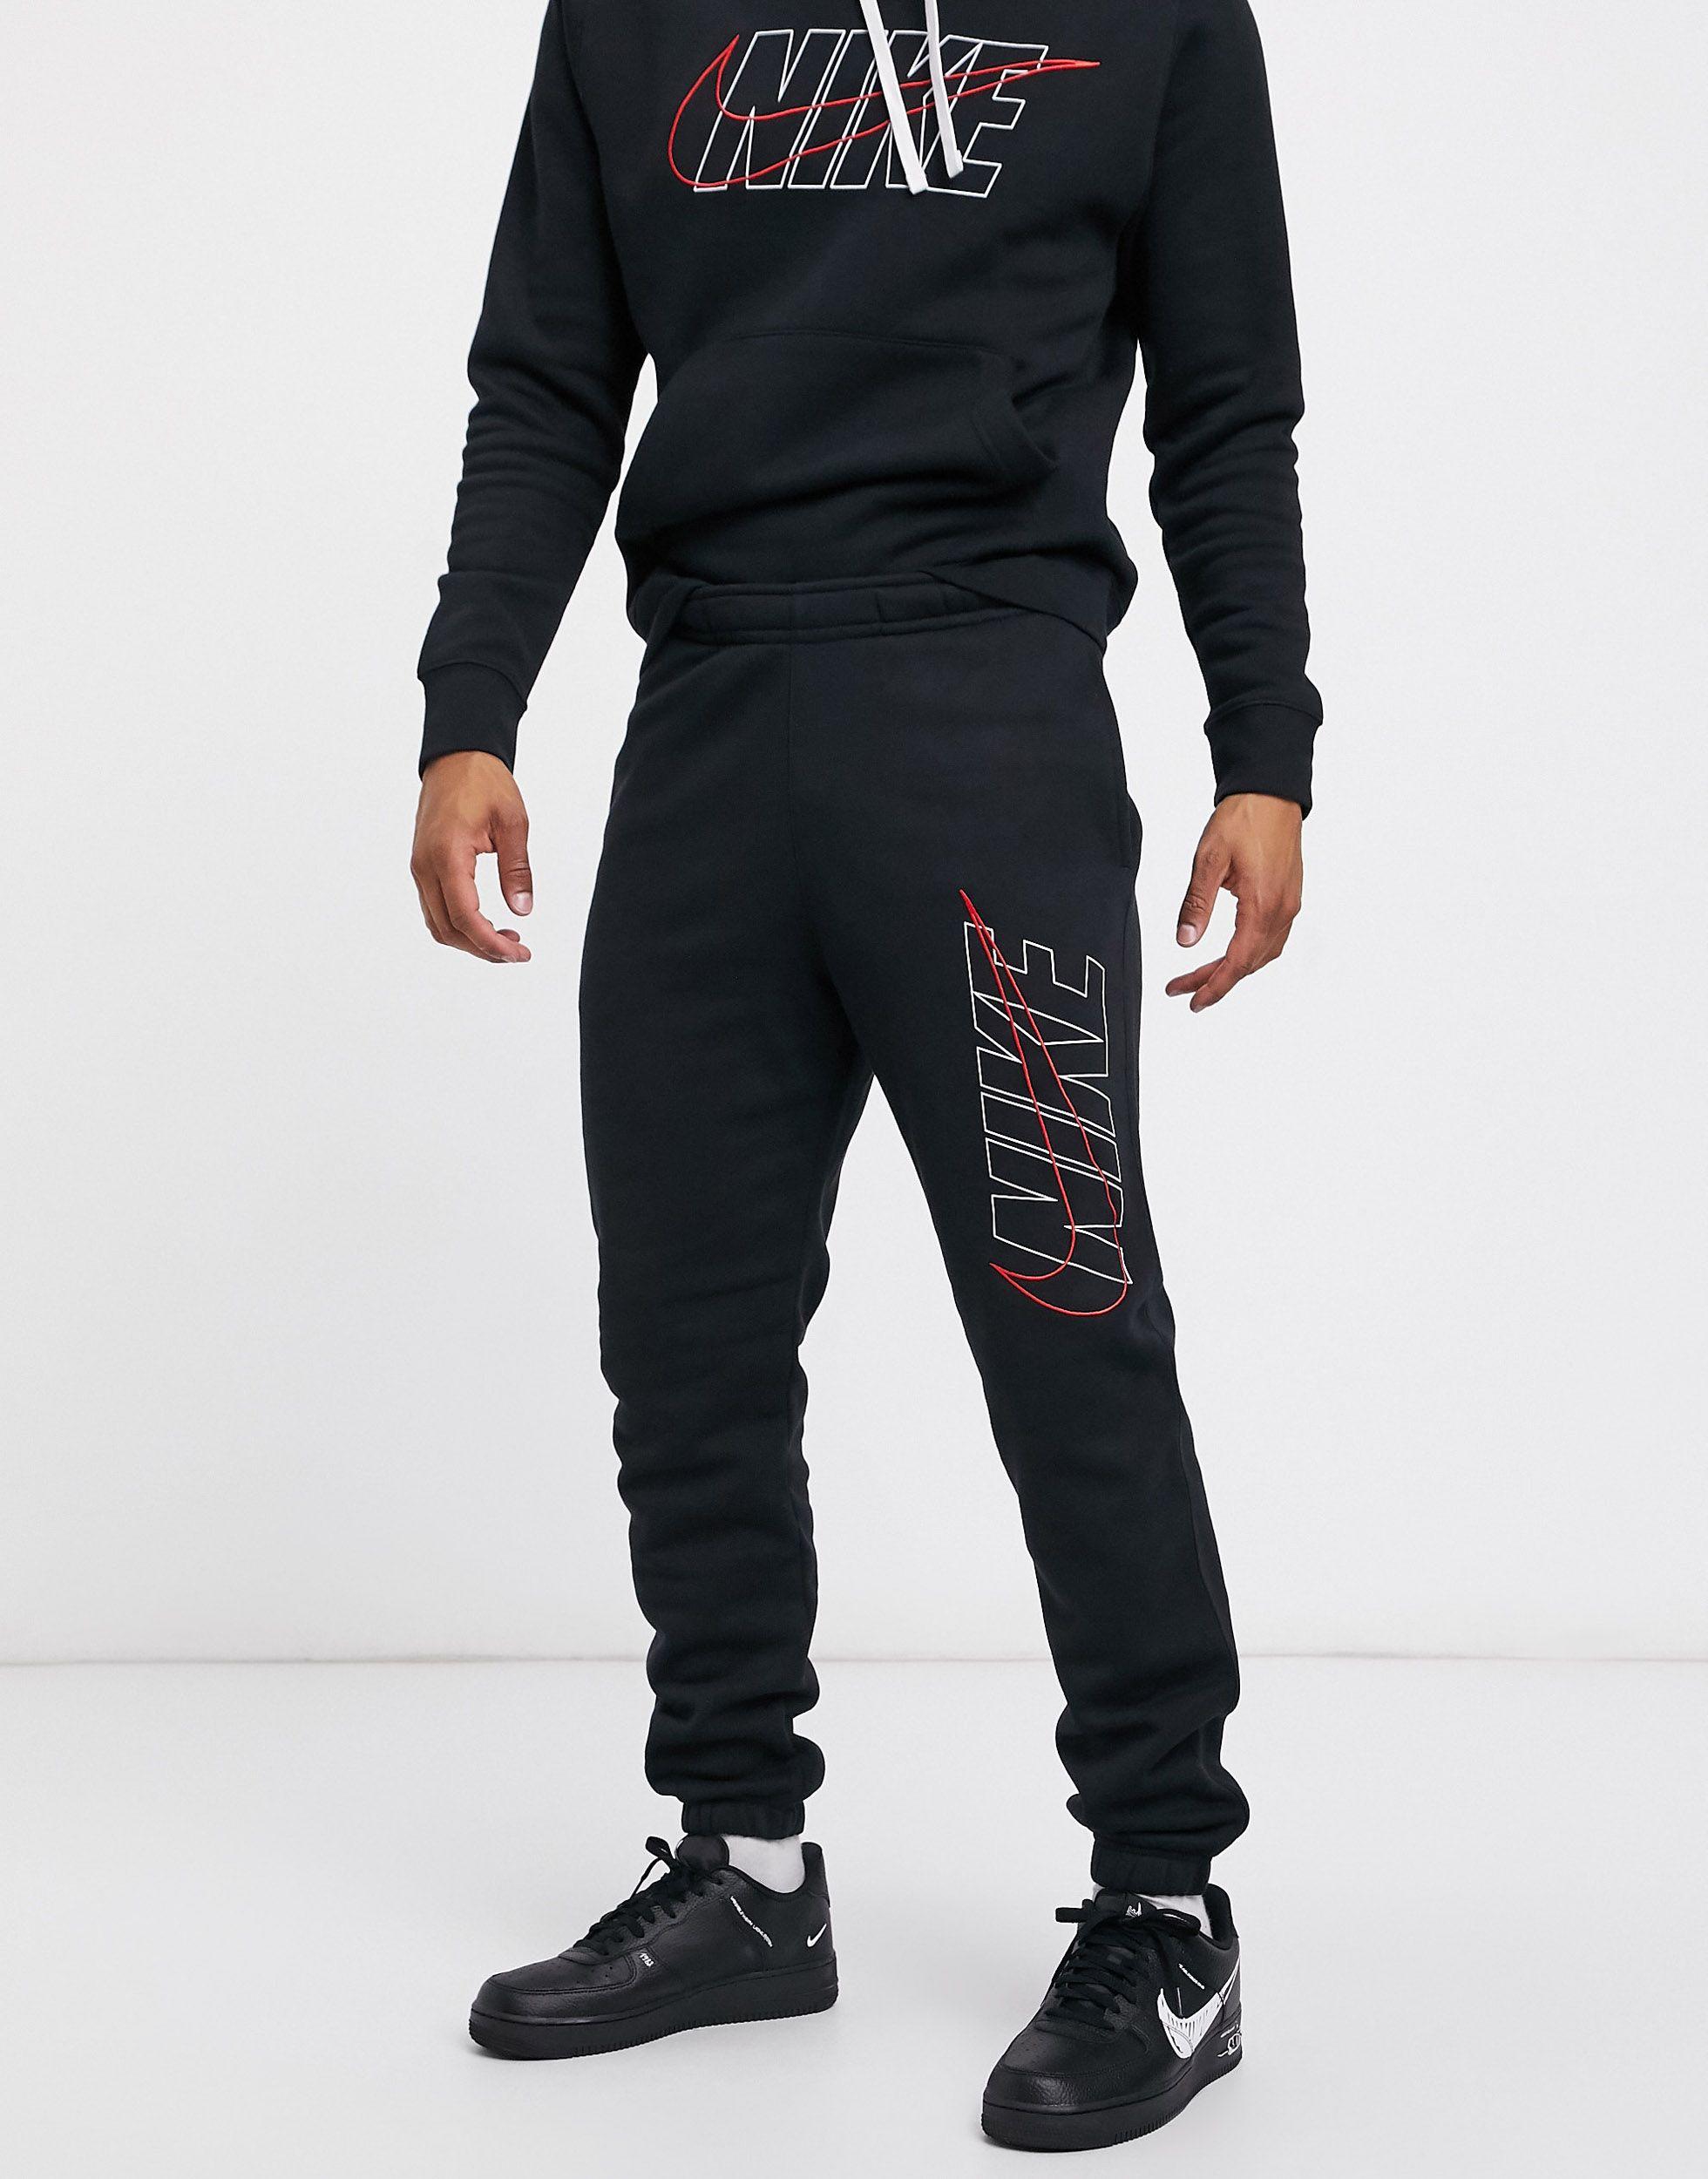 Nike Club Tracksuit Set in Black for Men - Lyst